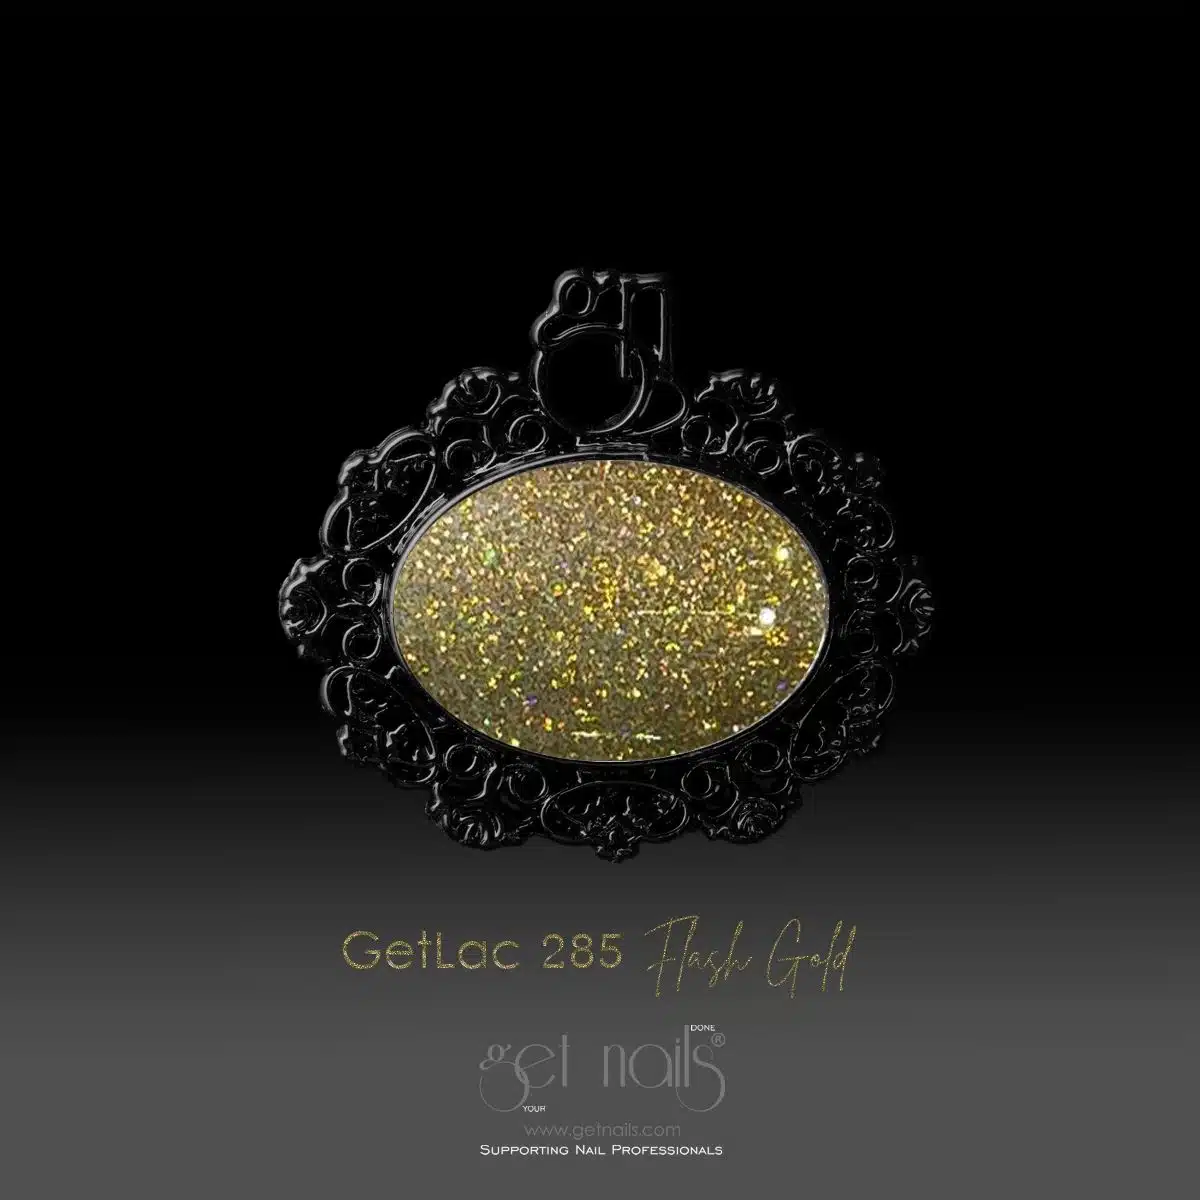 Get Nails Austria - GetLac 285 Flash Gold 15g